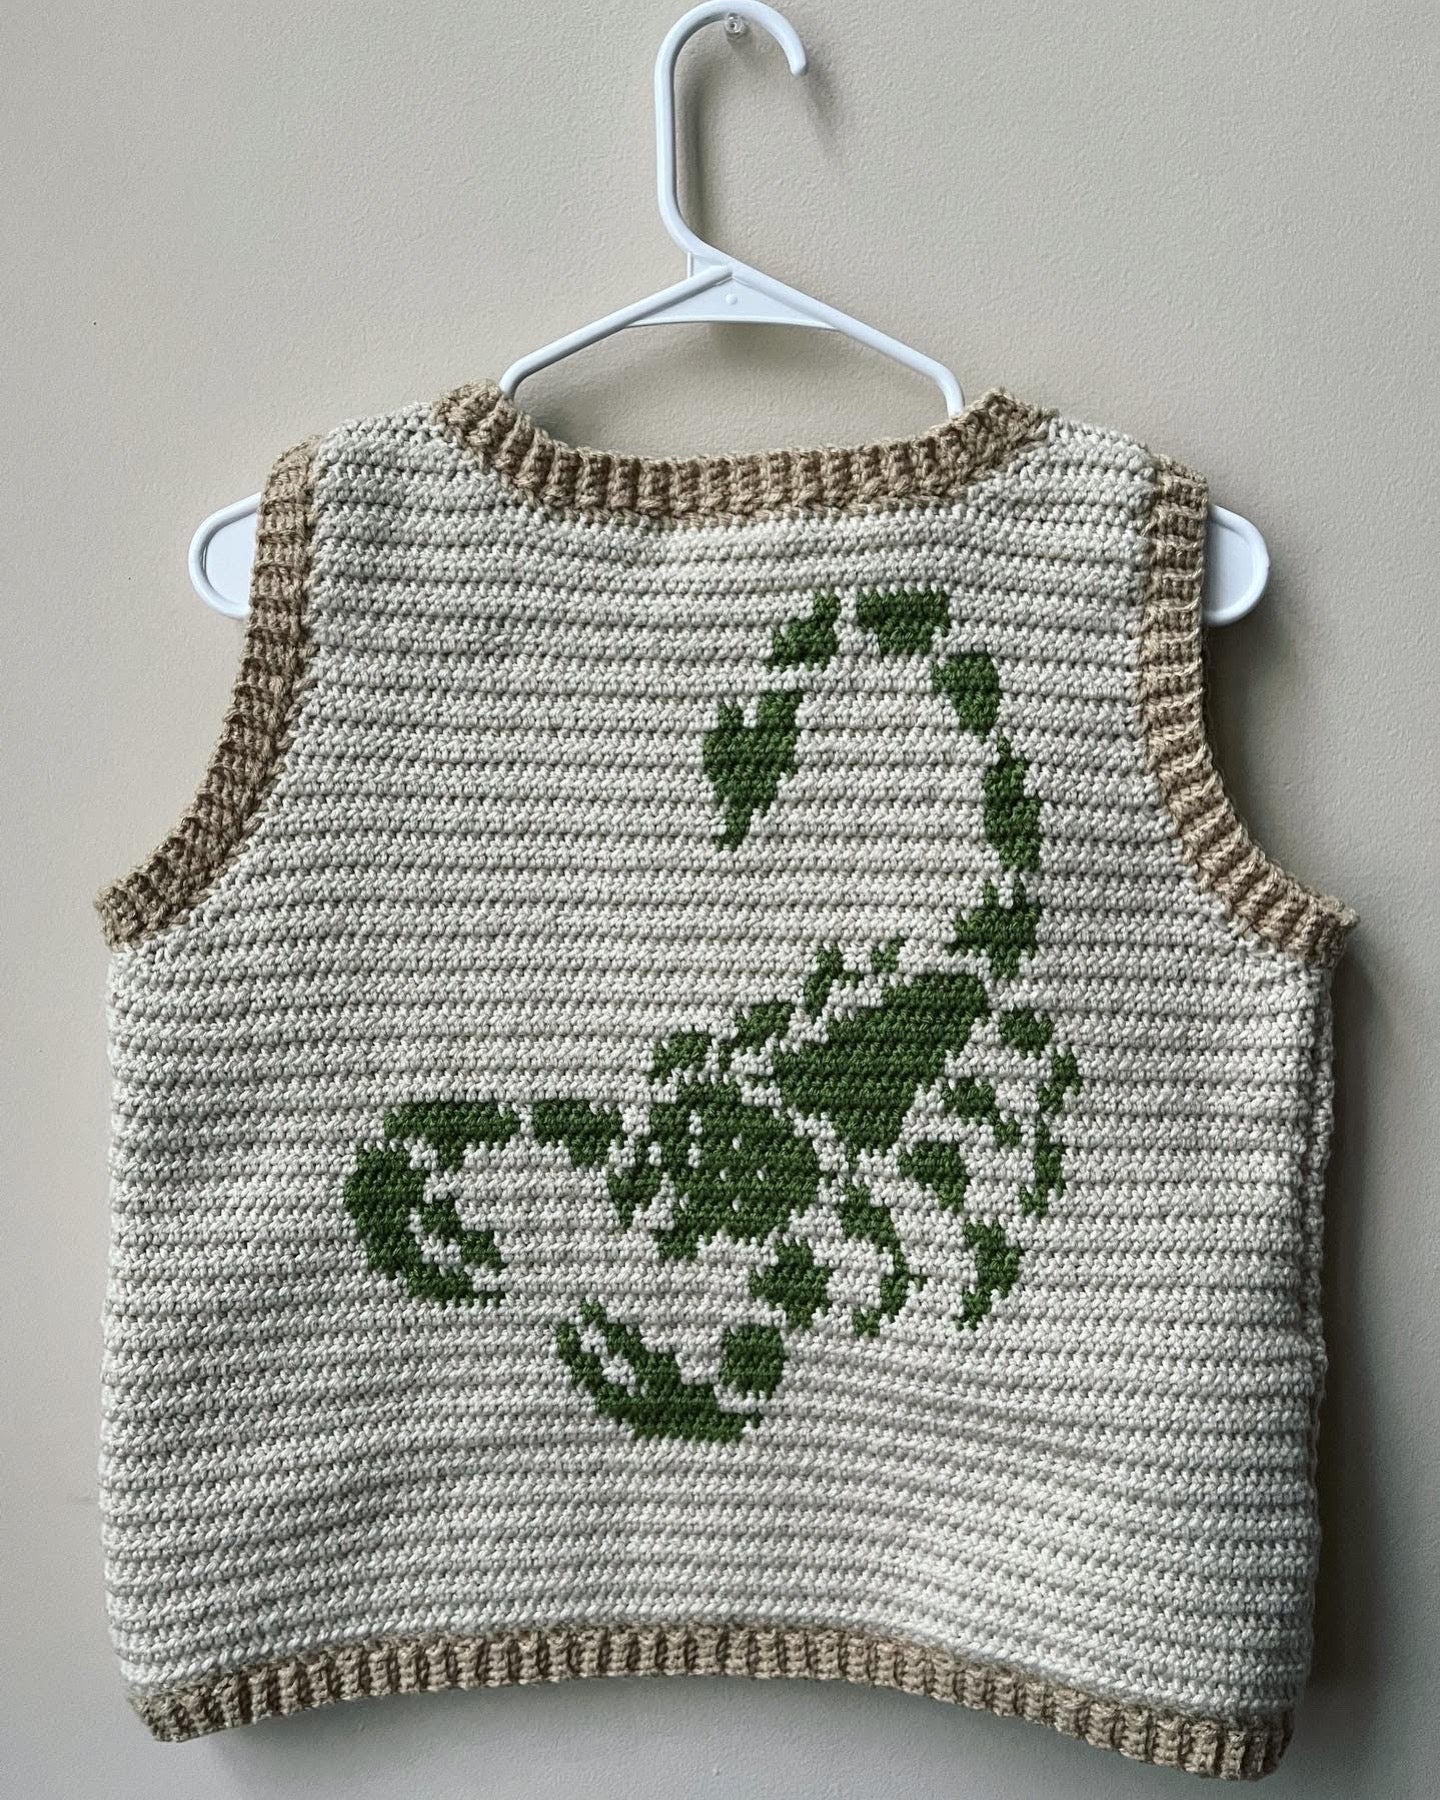 9 Crochet Vest Patterns for Kids • Salty Pearl Crochet